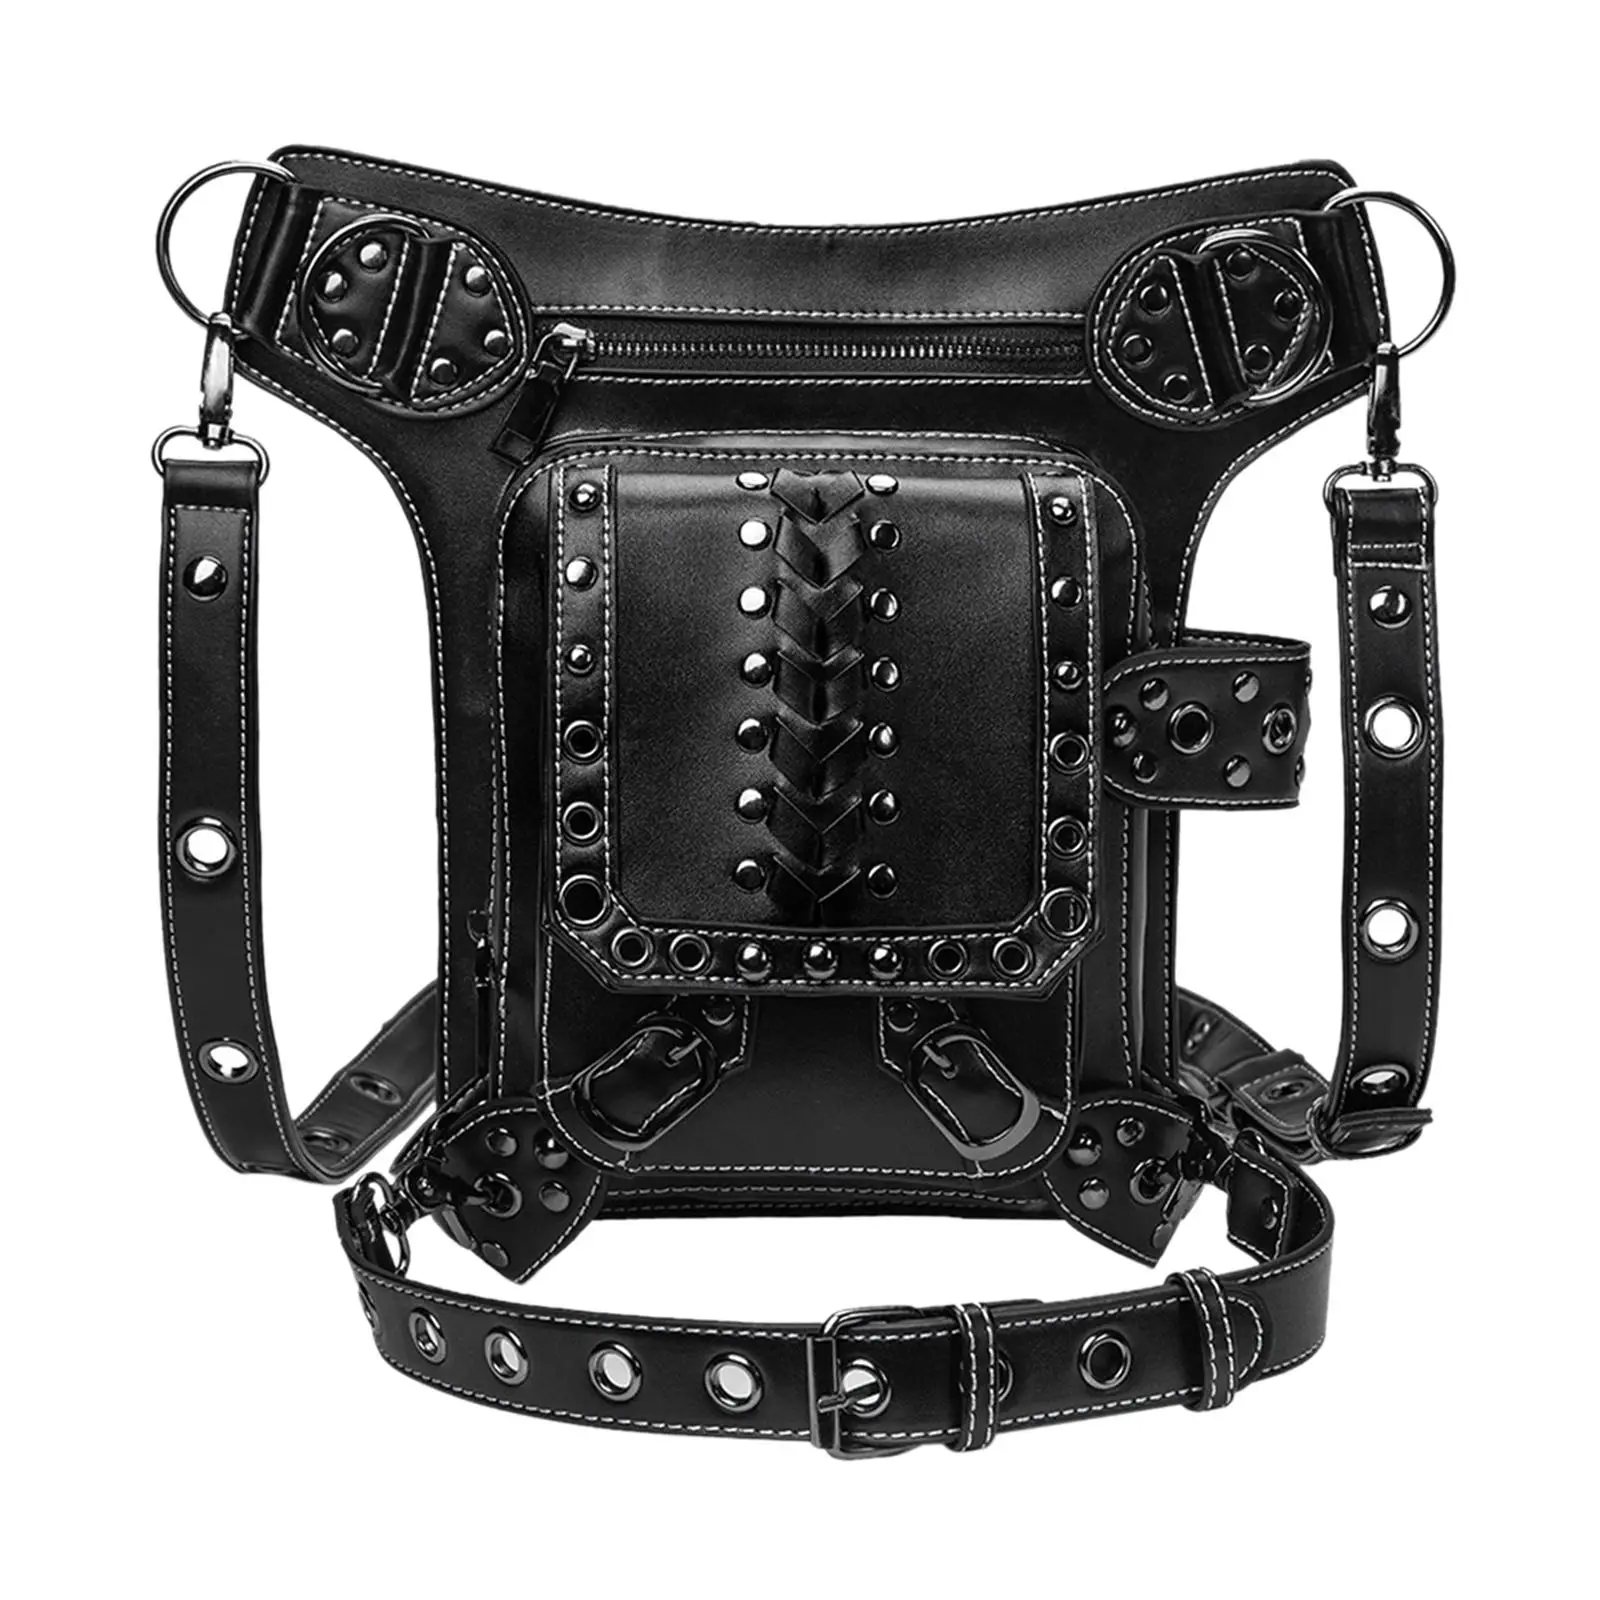 Gothic Steampunk Waist Bag Pouch Thigh Leg Hip Adjustable Strap Satchel Shoulder Bag Fanny Pack for Backpacking Work Hiking